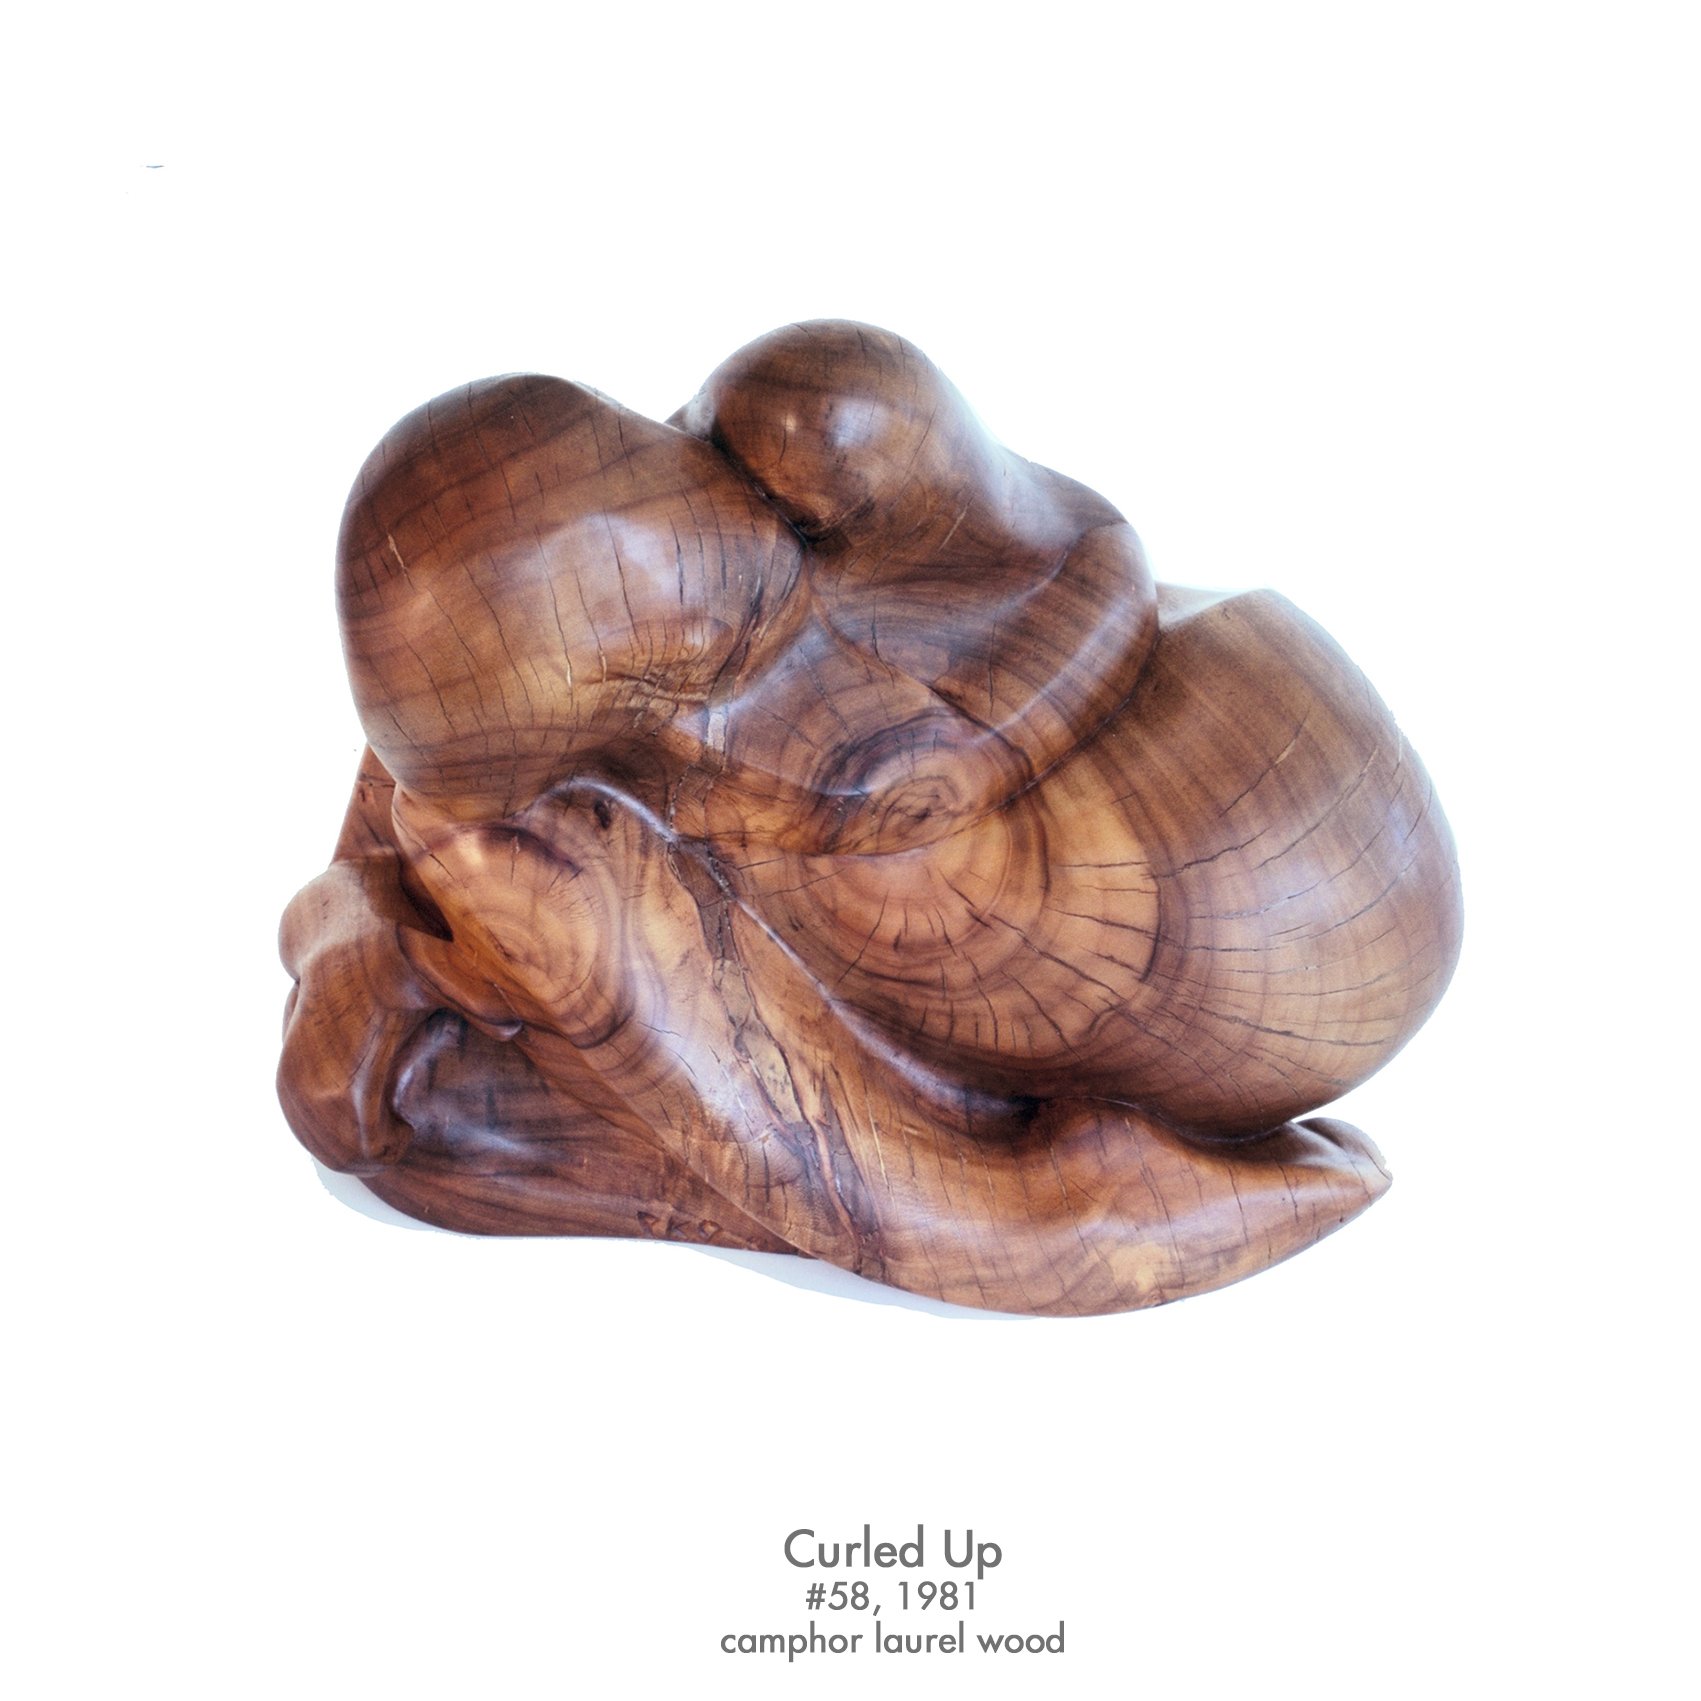 Curled Up, 1981, camphor laurel, #58